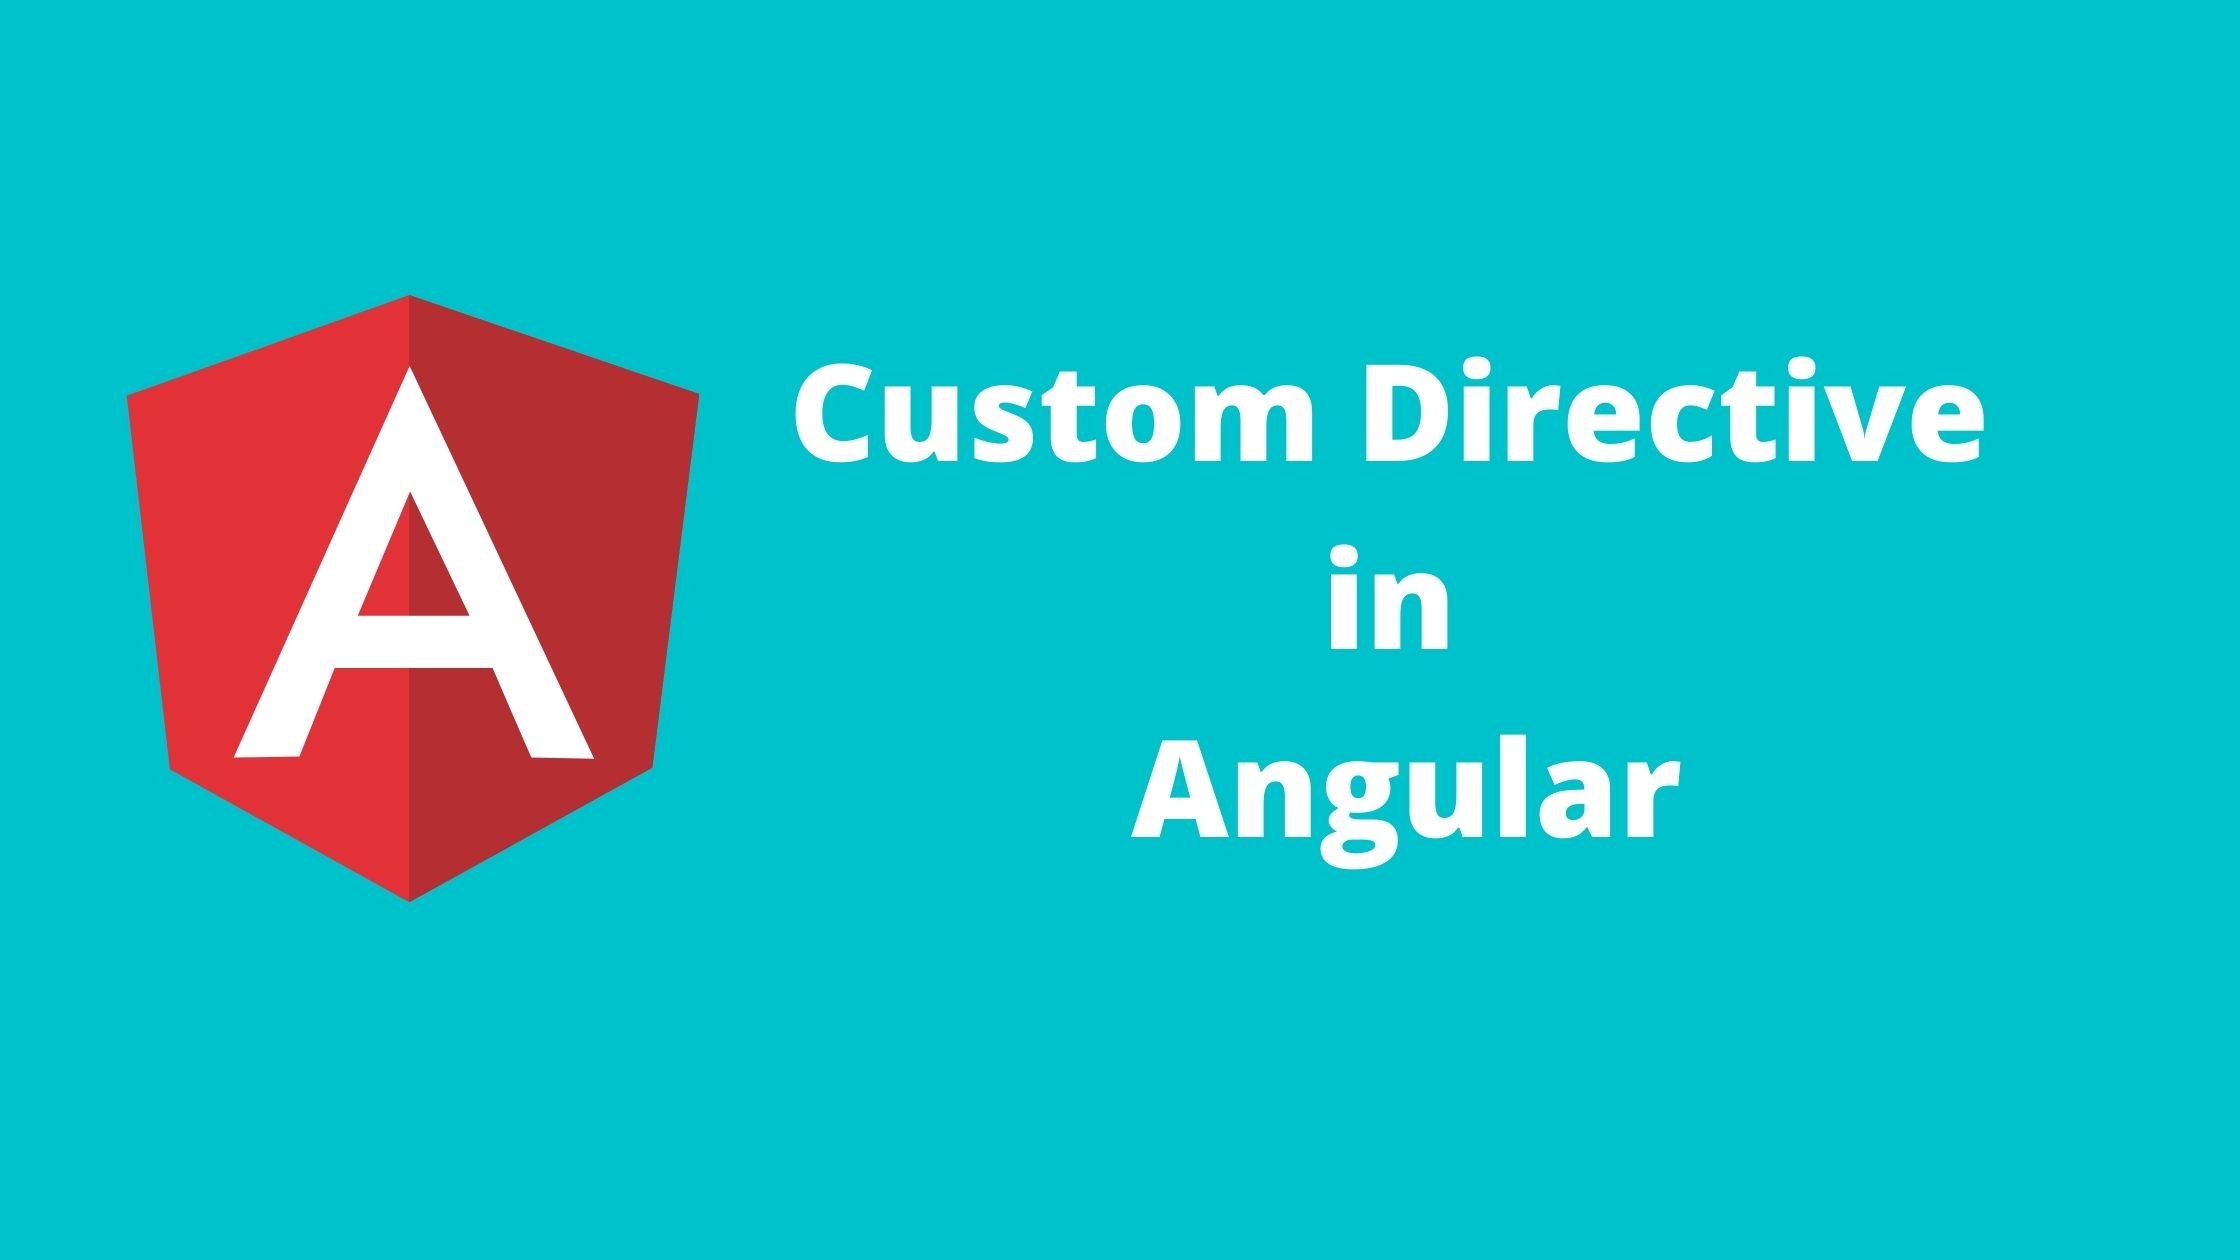 How to create a custom directive in angular